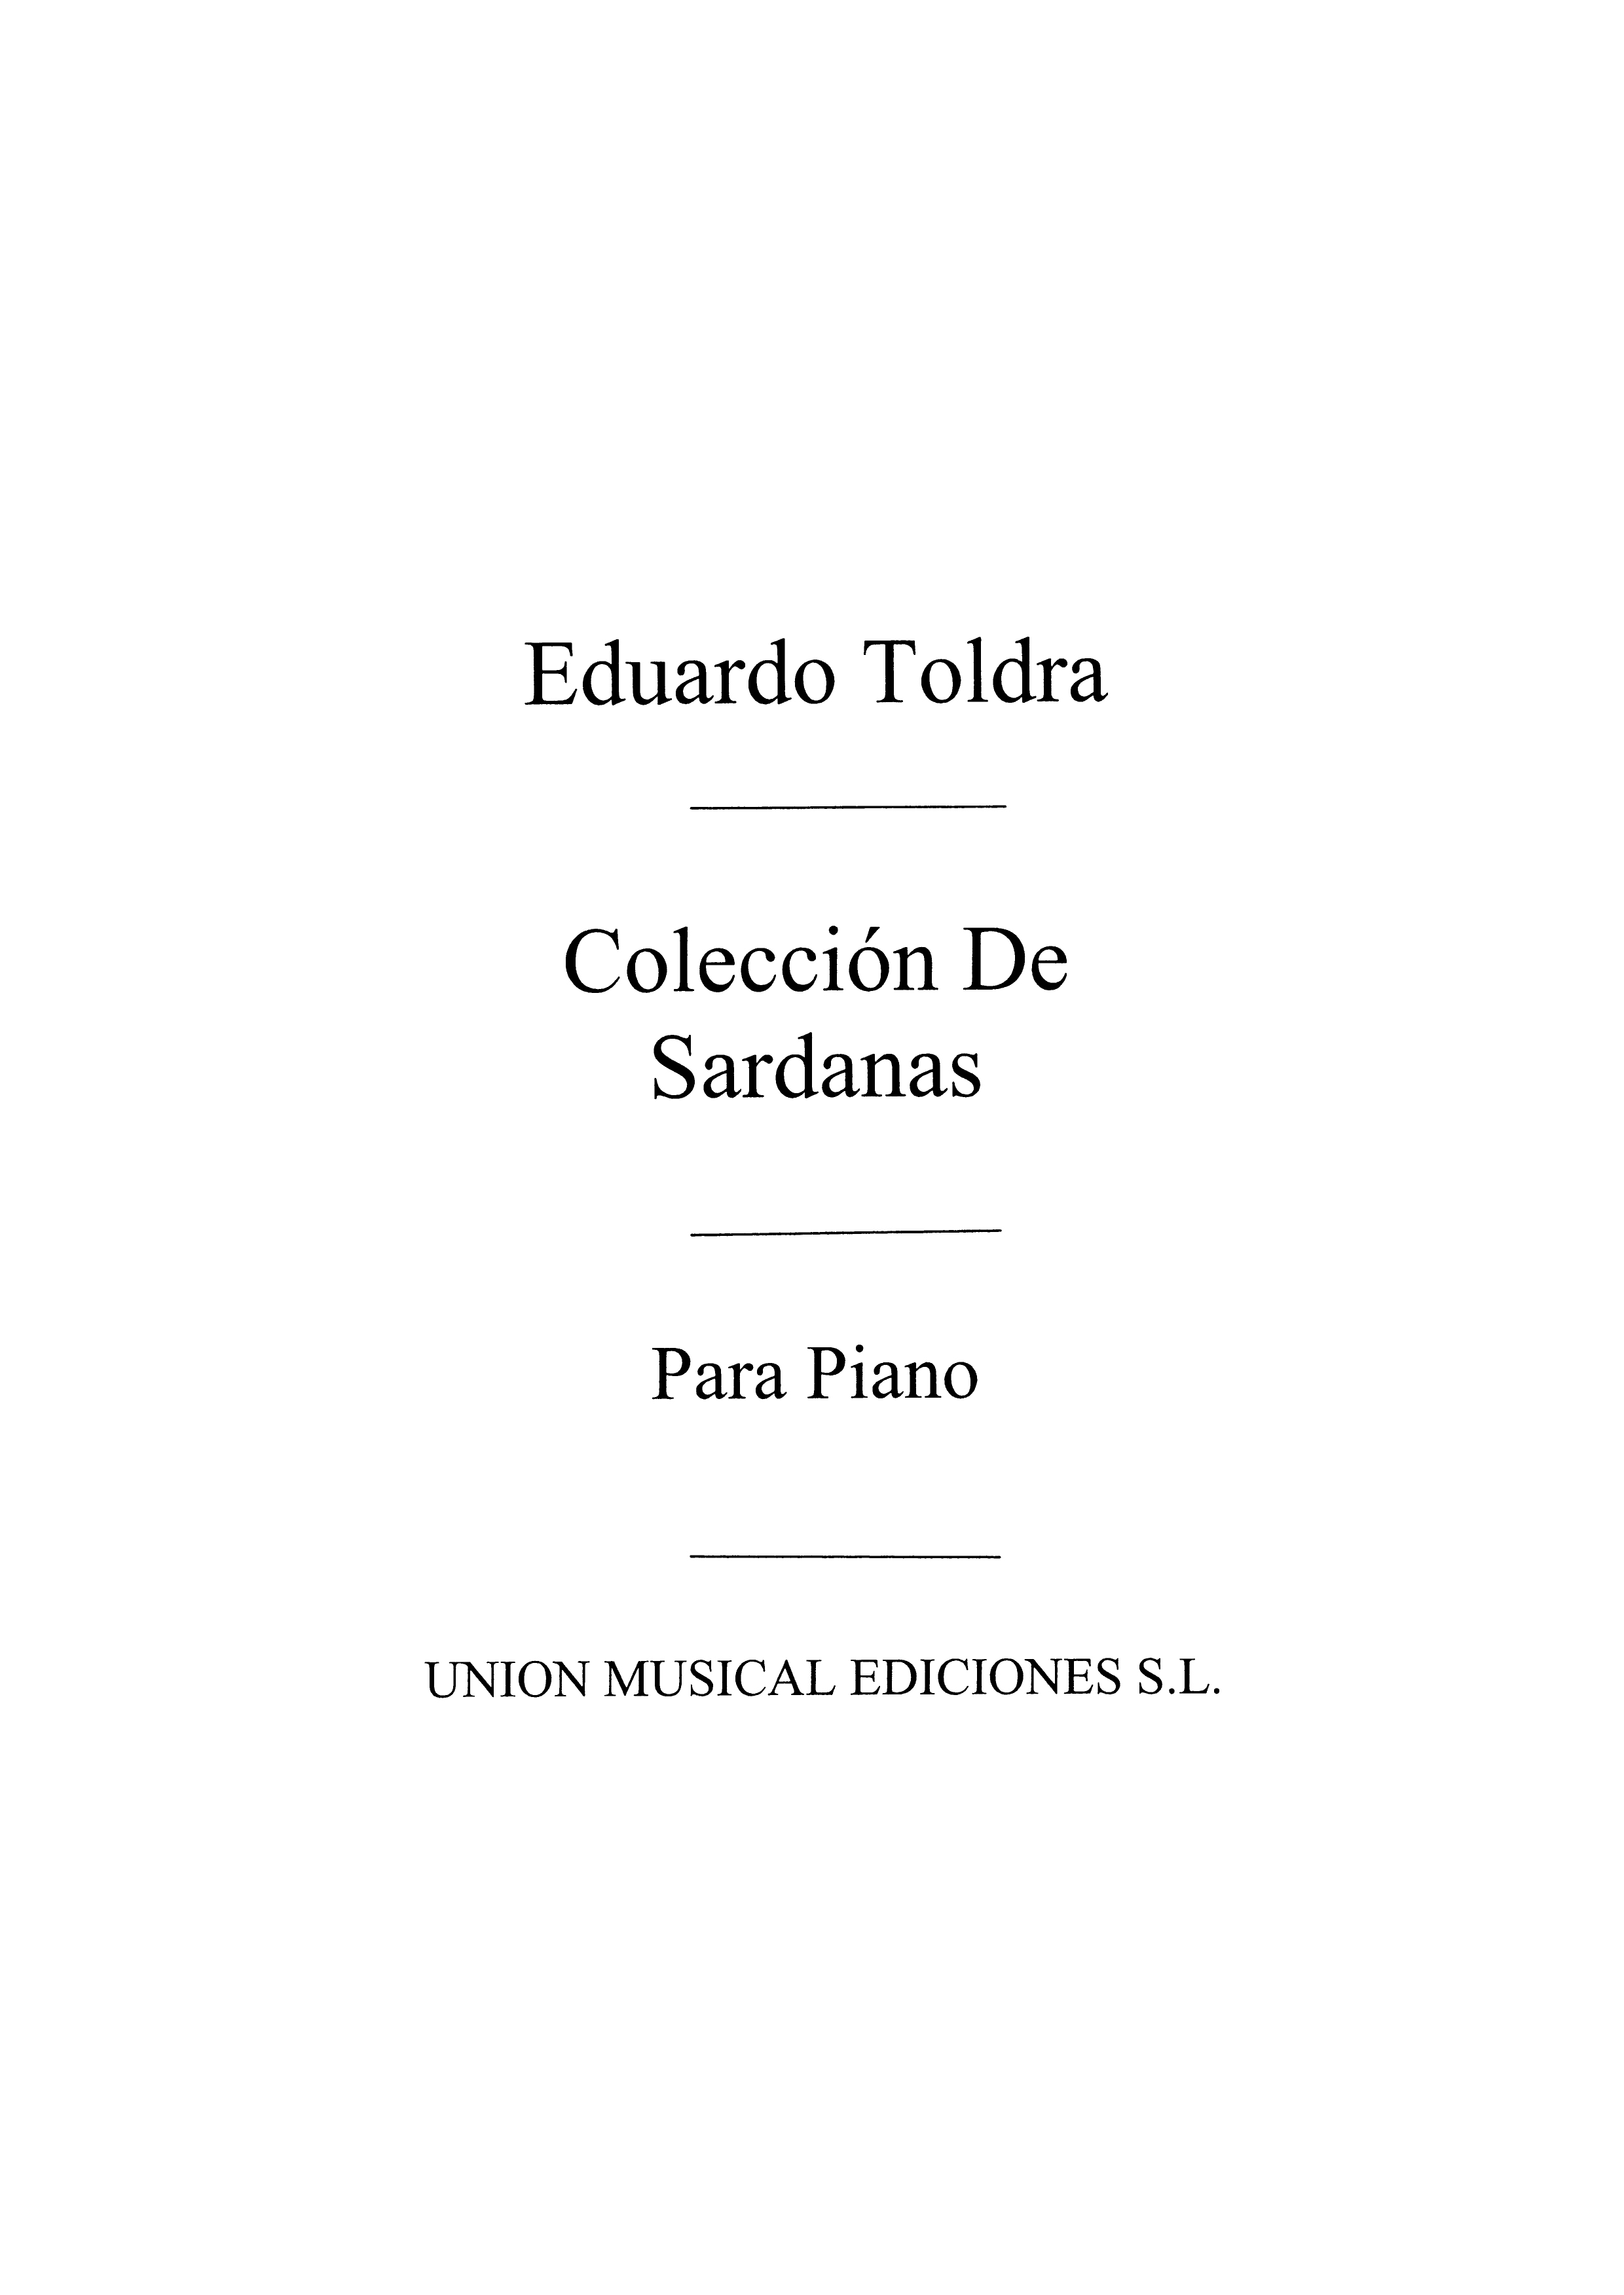 Eduardo Toldra: Coleccion De Sardanas: Piano: Instrumental Work